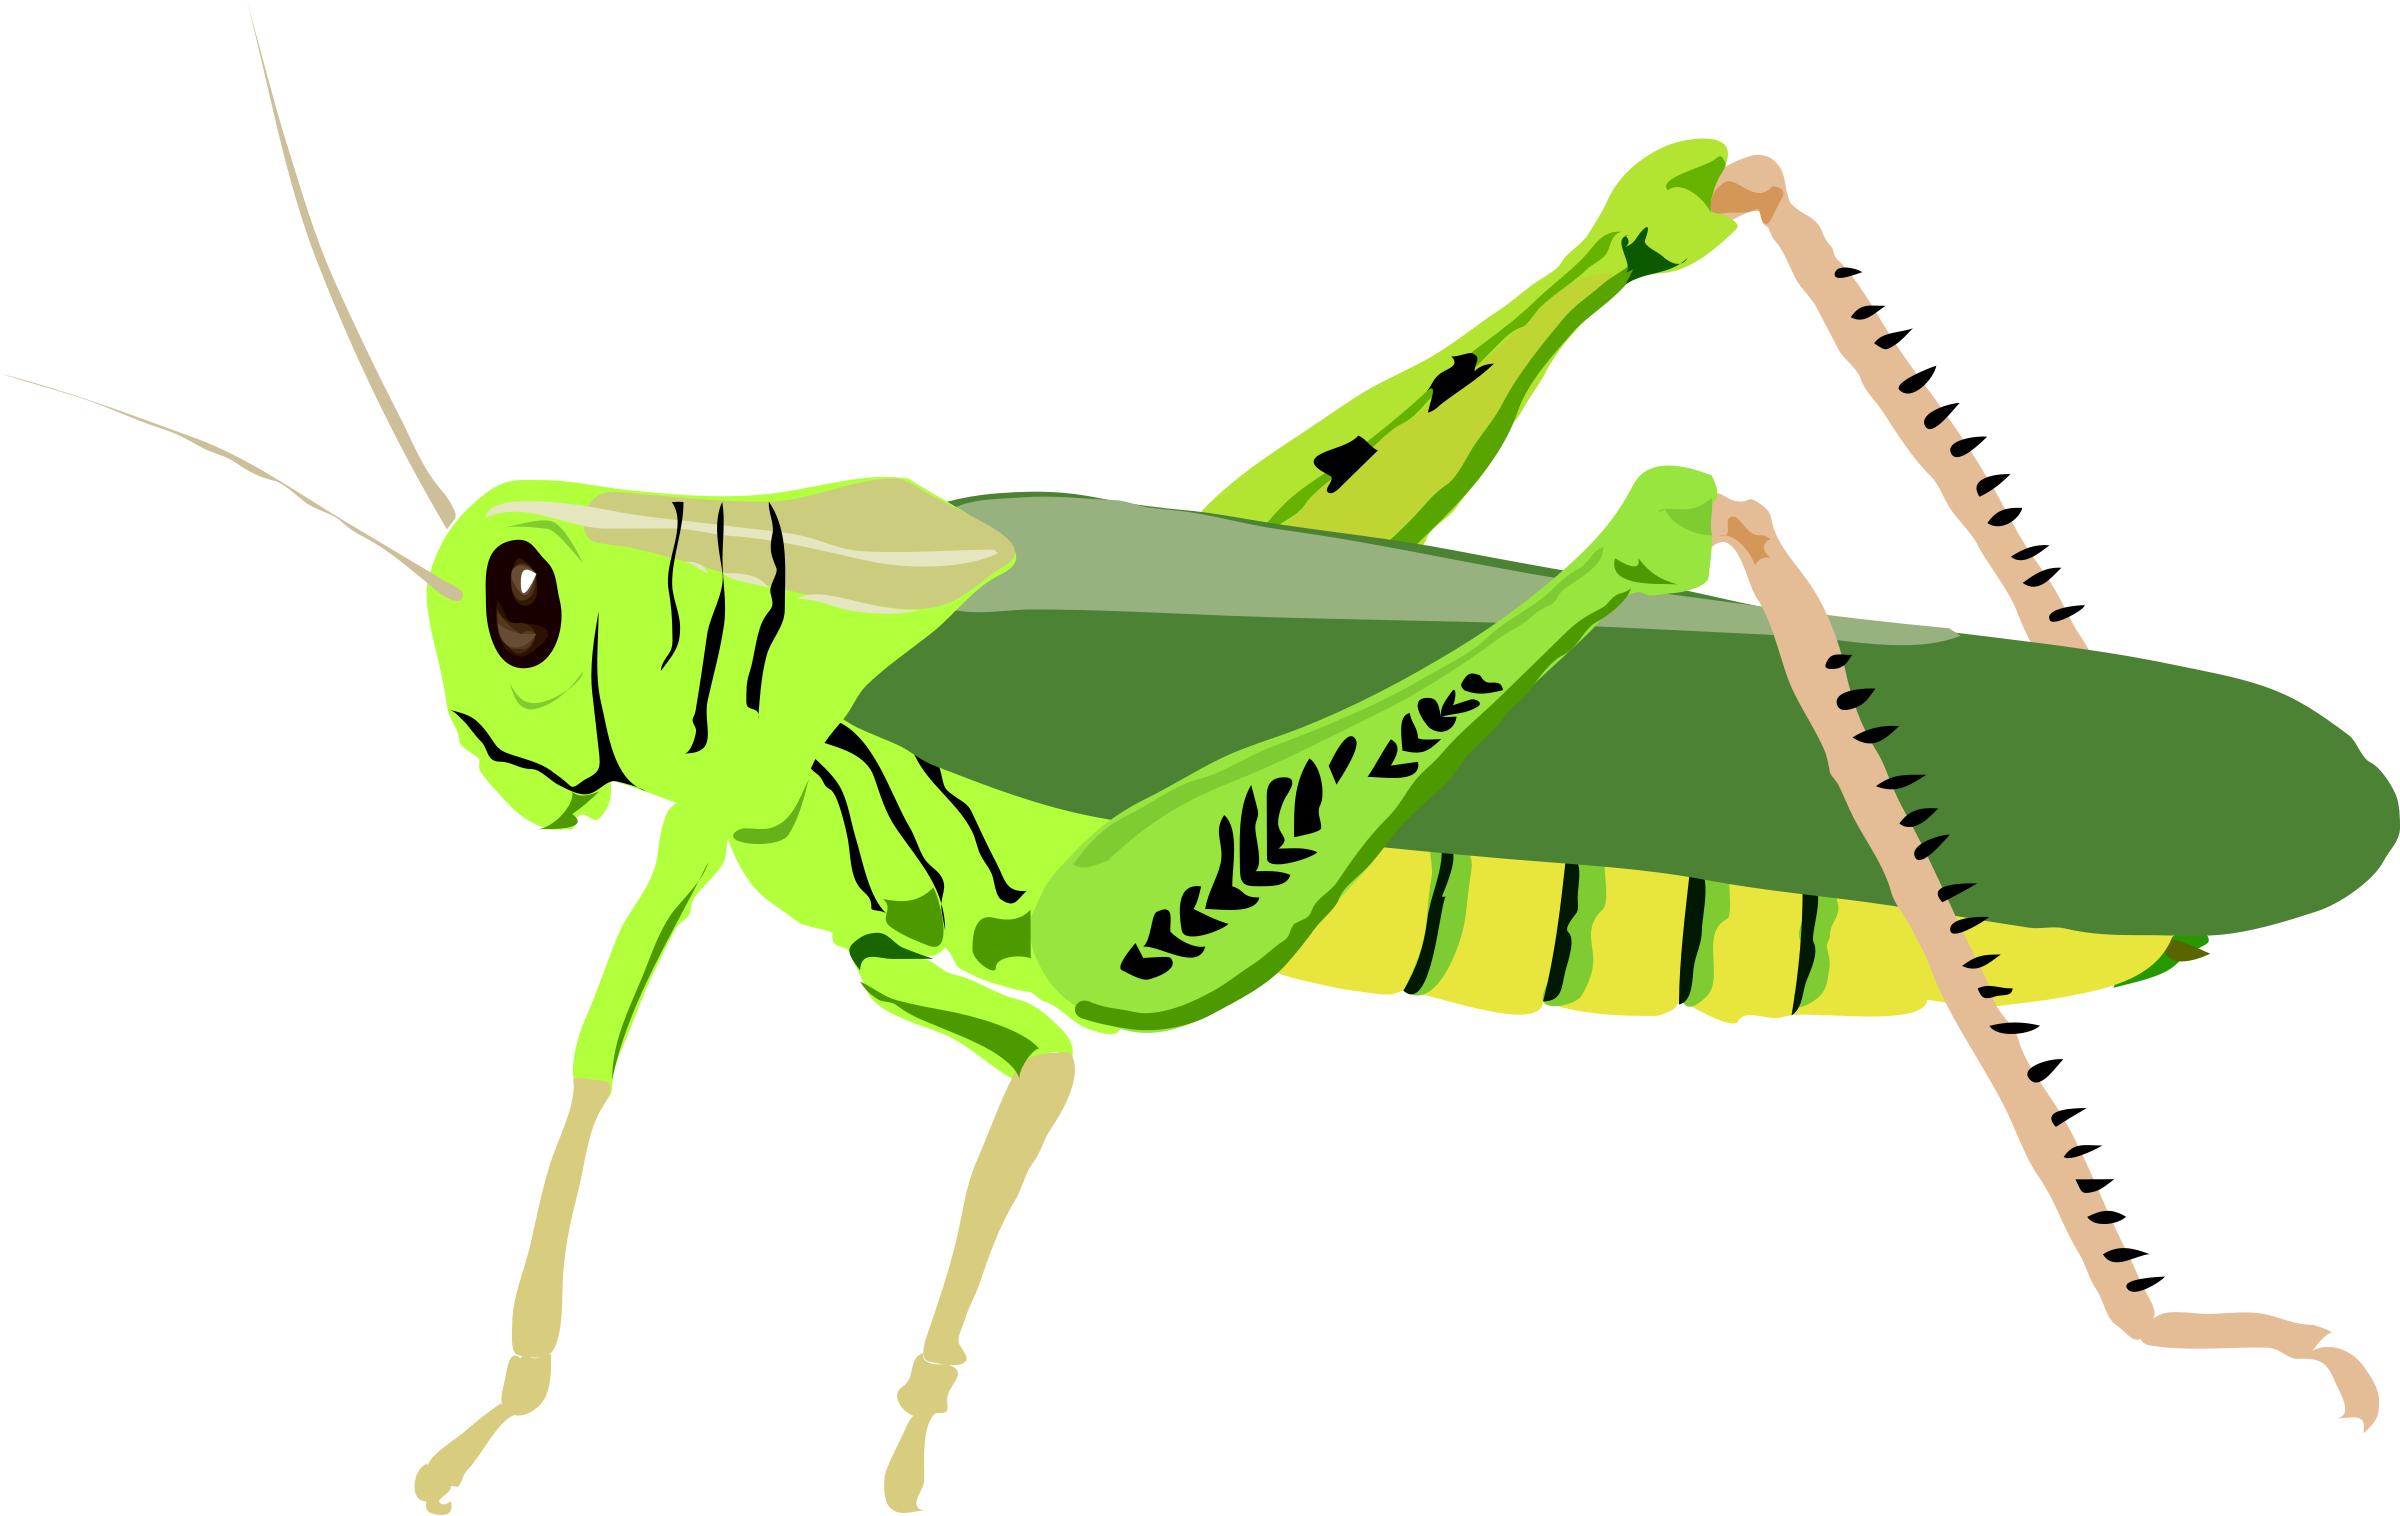 Grasshopper clipart images.